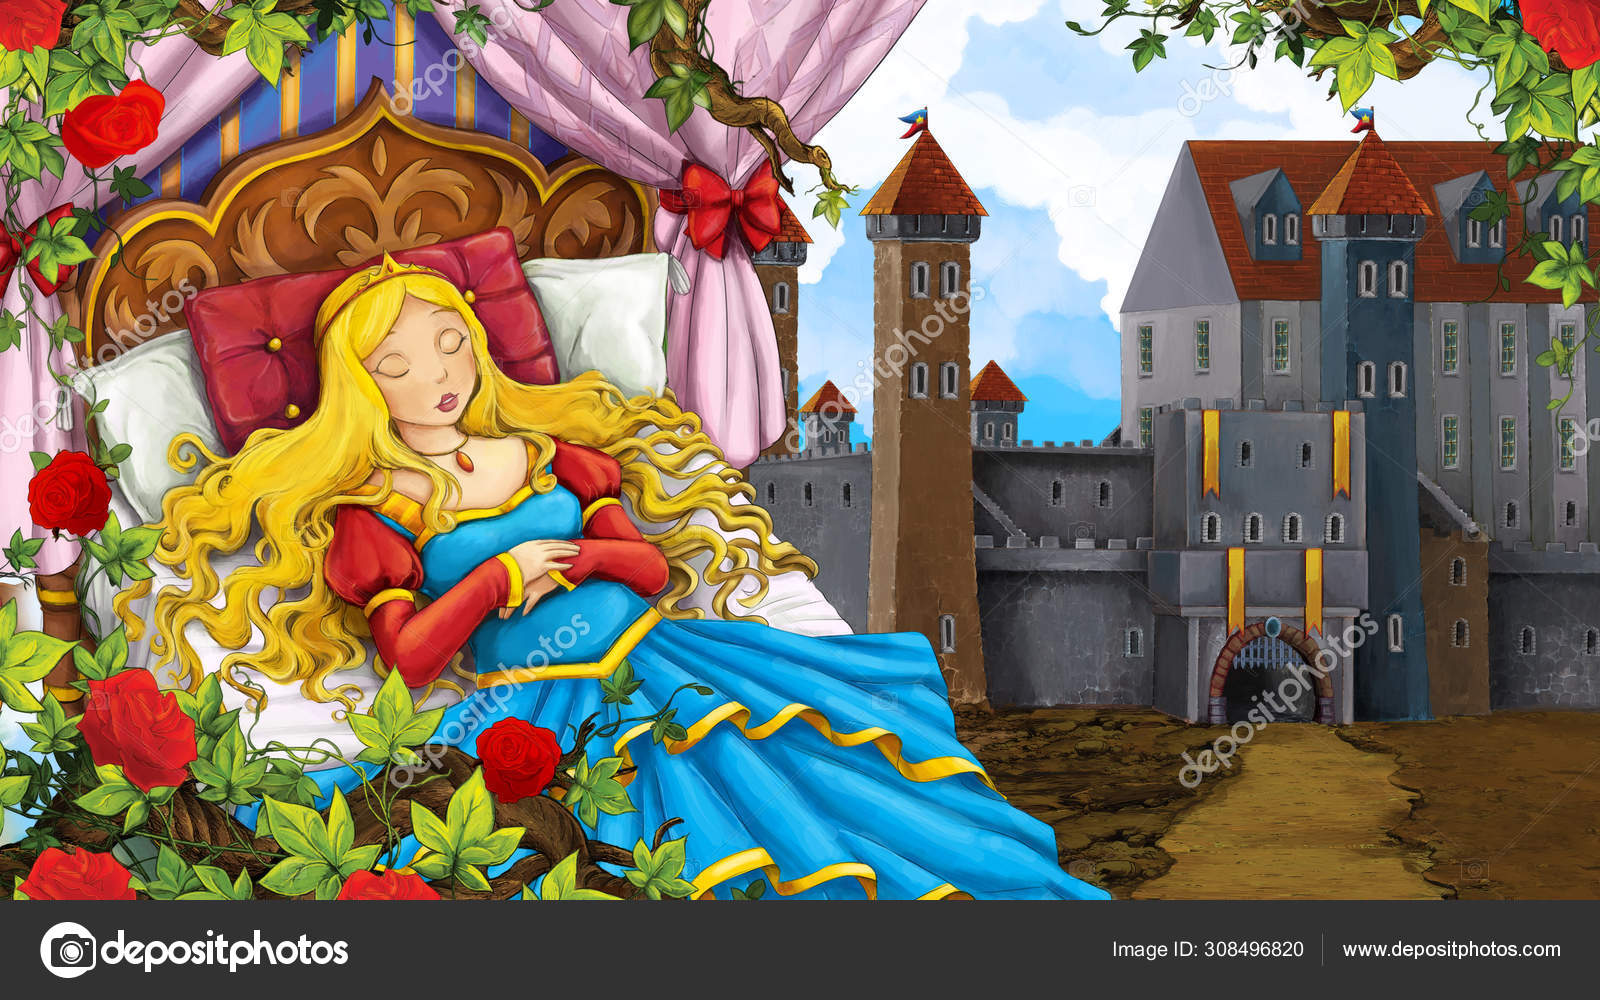 Cartoon scene of rose garden with sleeping princess near castle in the  background illustration for children Stock Photo by ©illustrator_hft  308496820